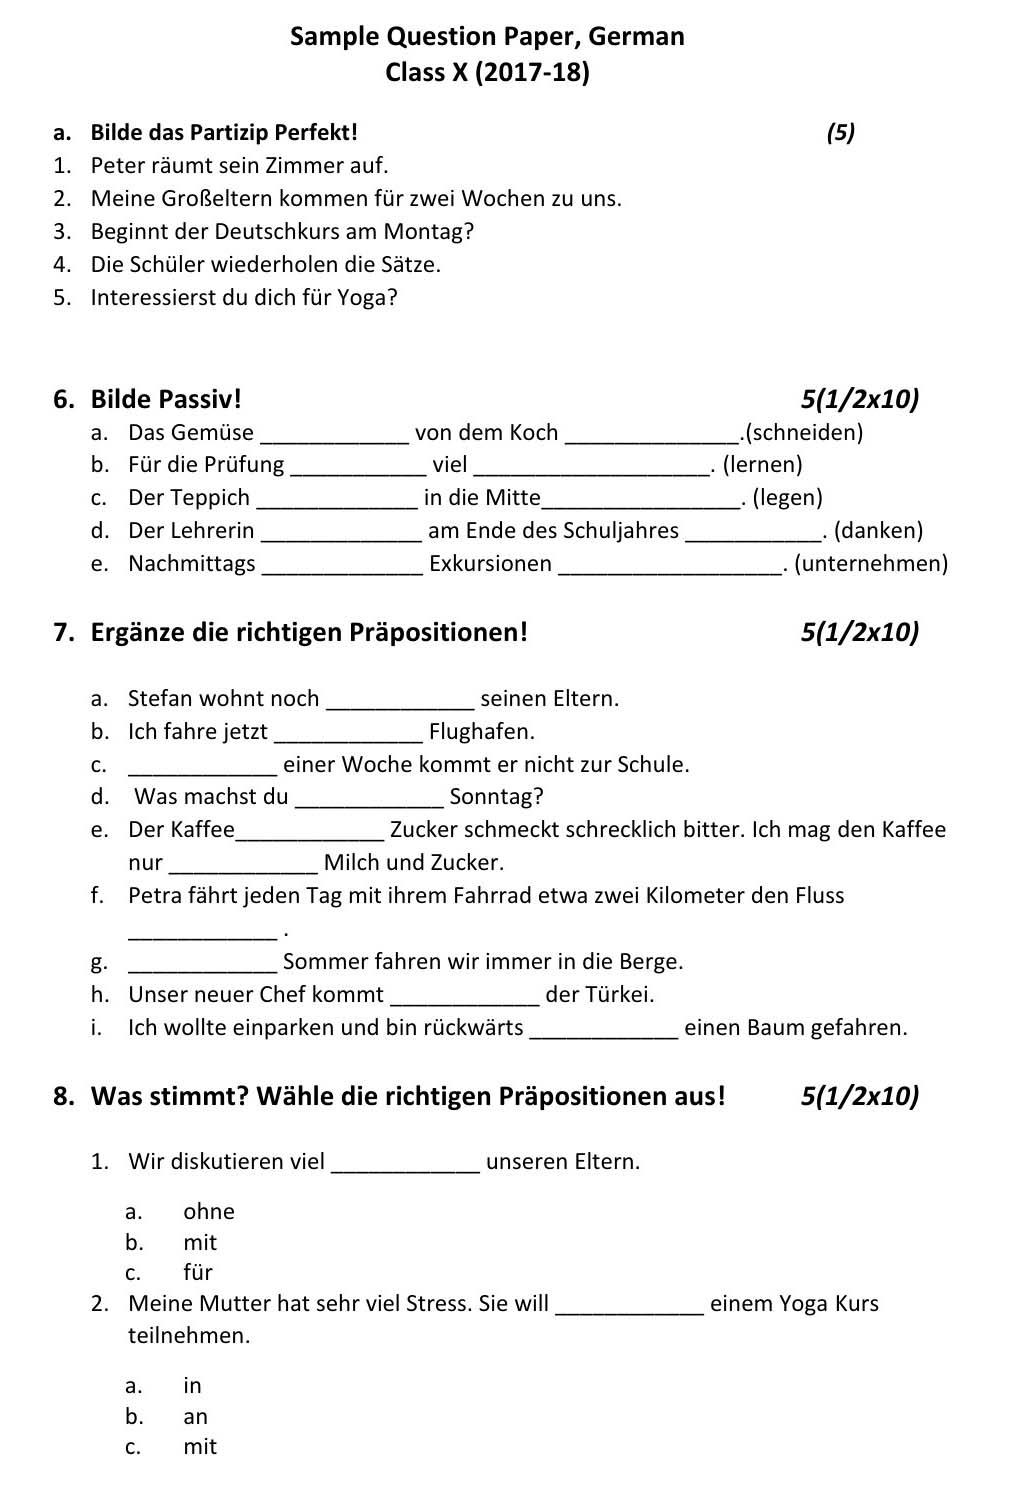 German CBSE Class X Sample Question Paper 2017 18 - Image 5